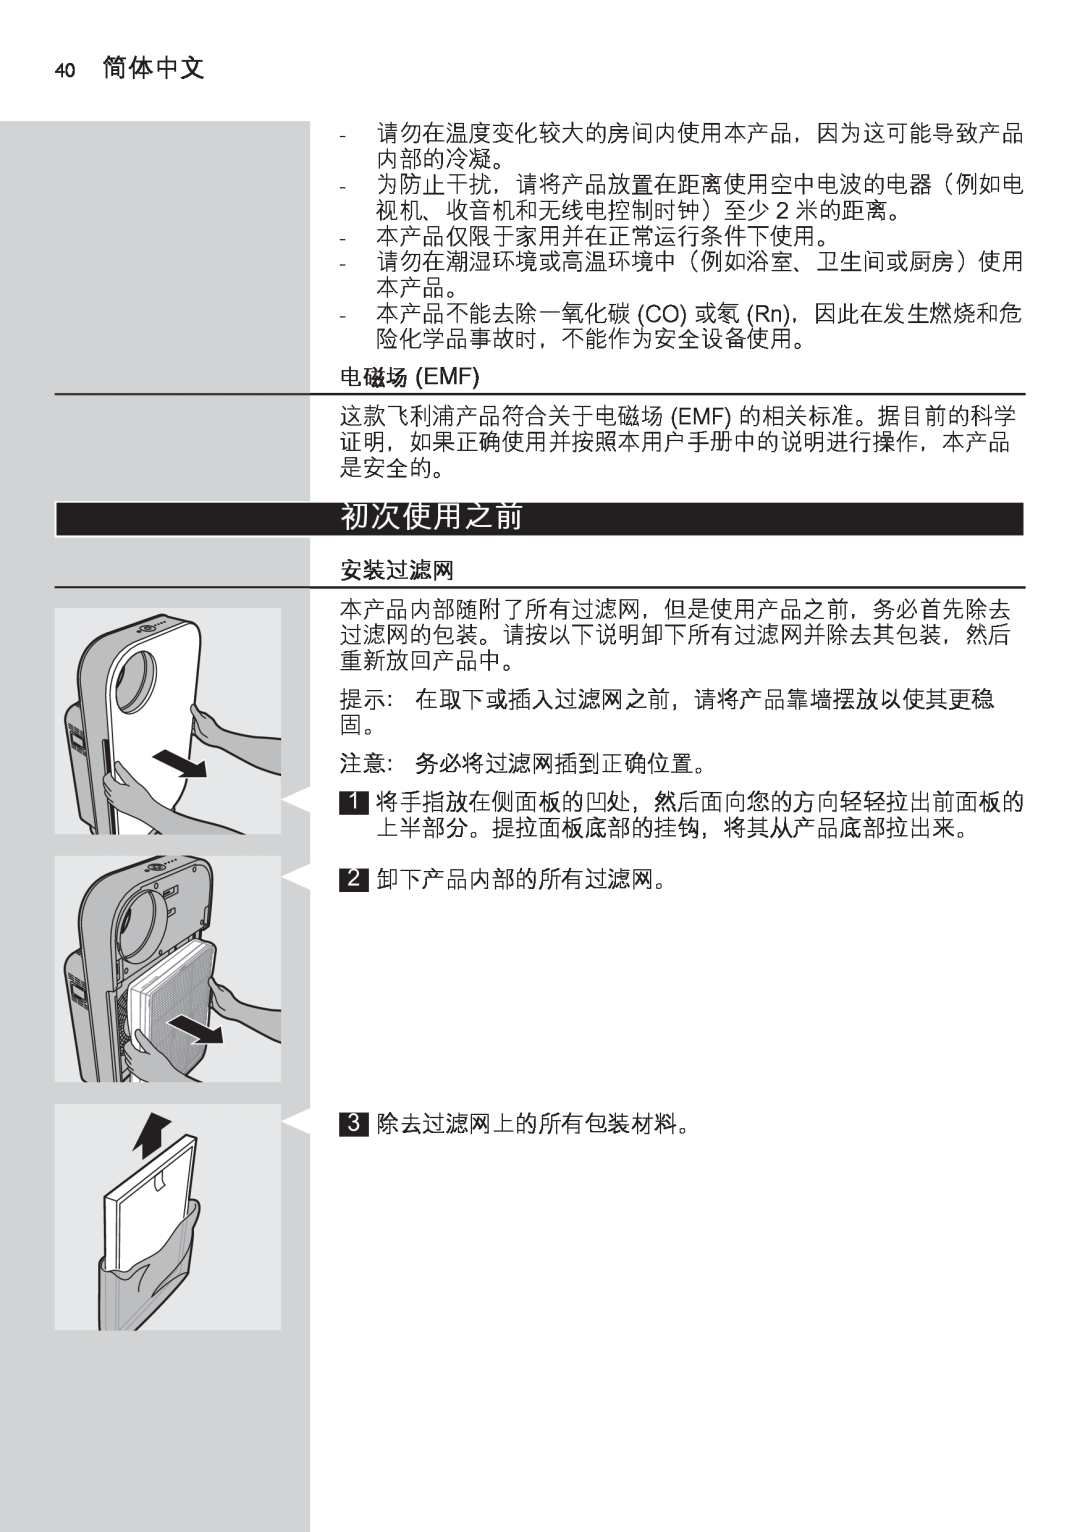 Philips AC4074 manual 初次使用之前, 40简体中文, 电磁场 Emf, 安装过滤网 